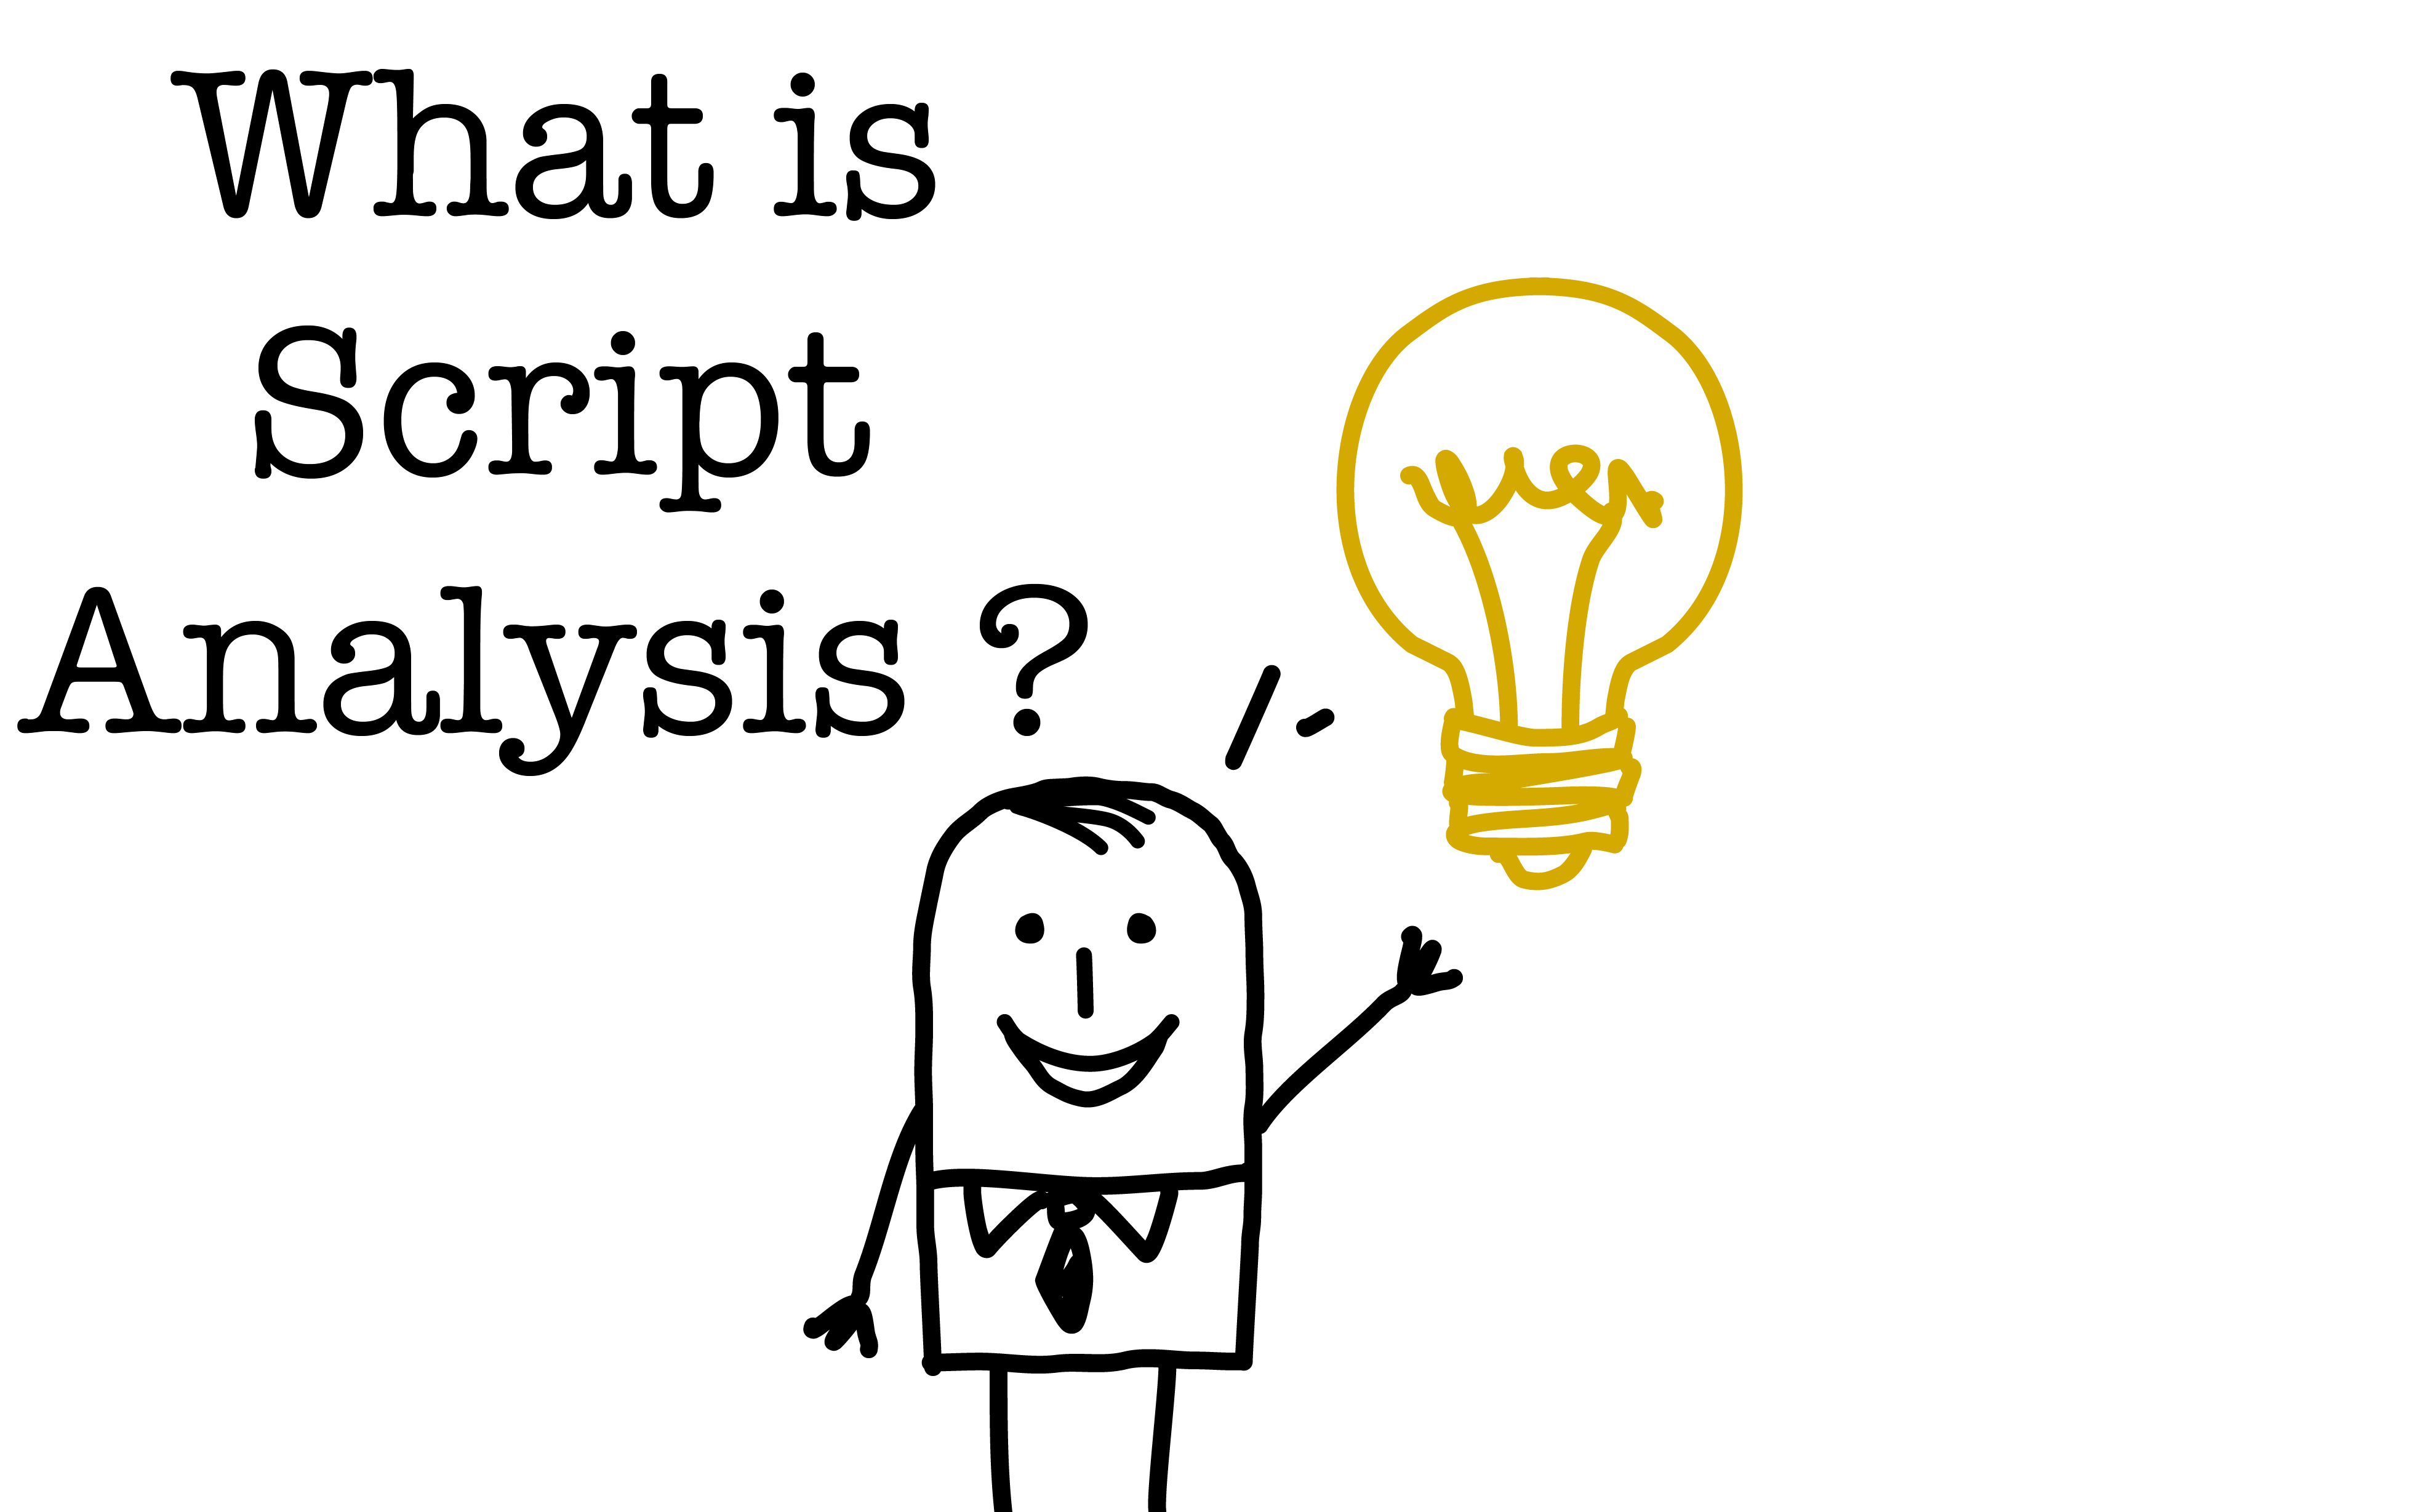 Script Analysis